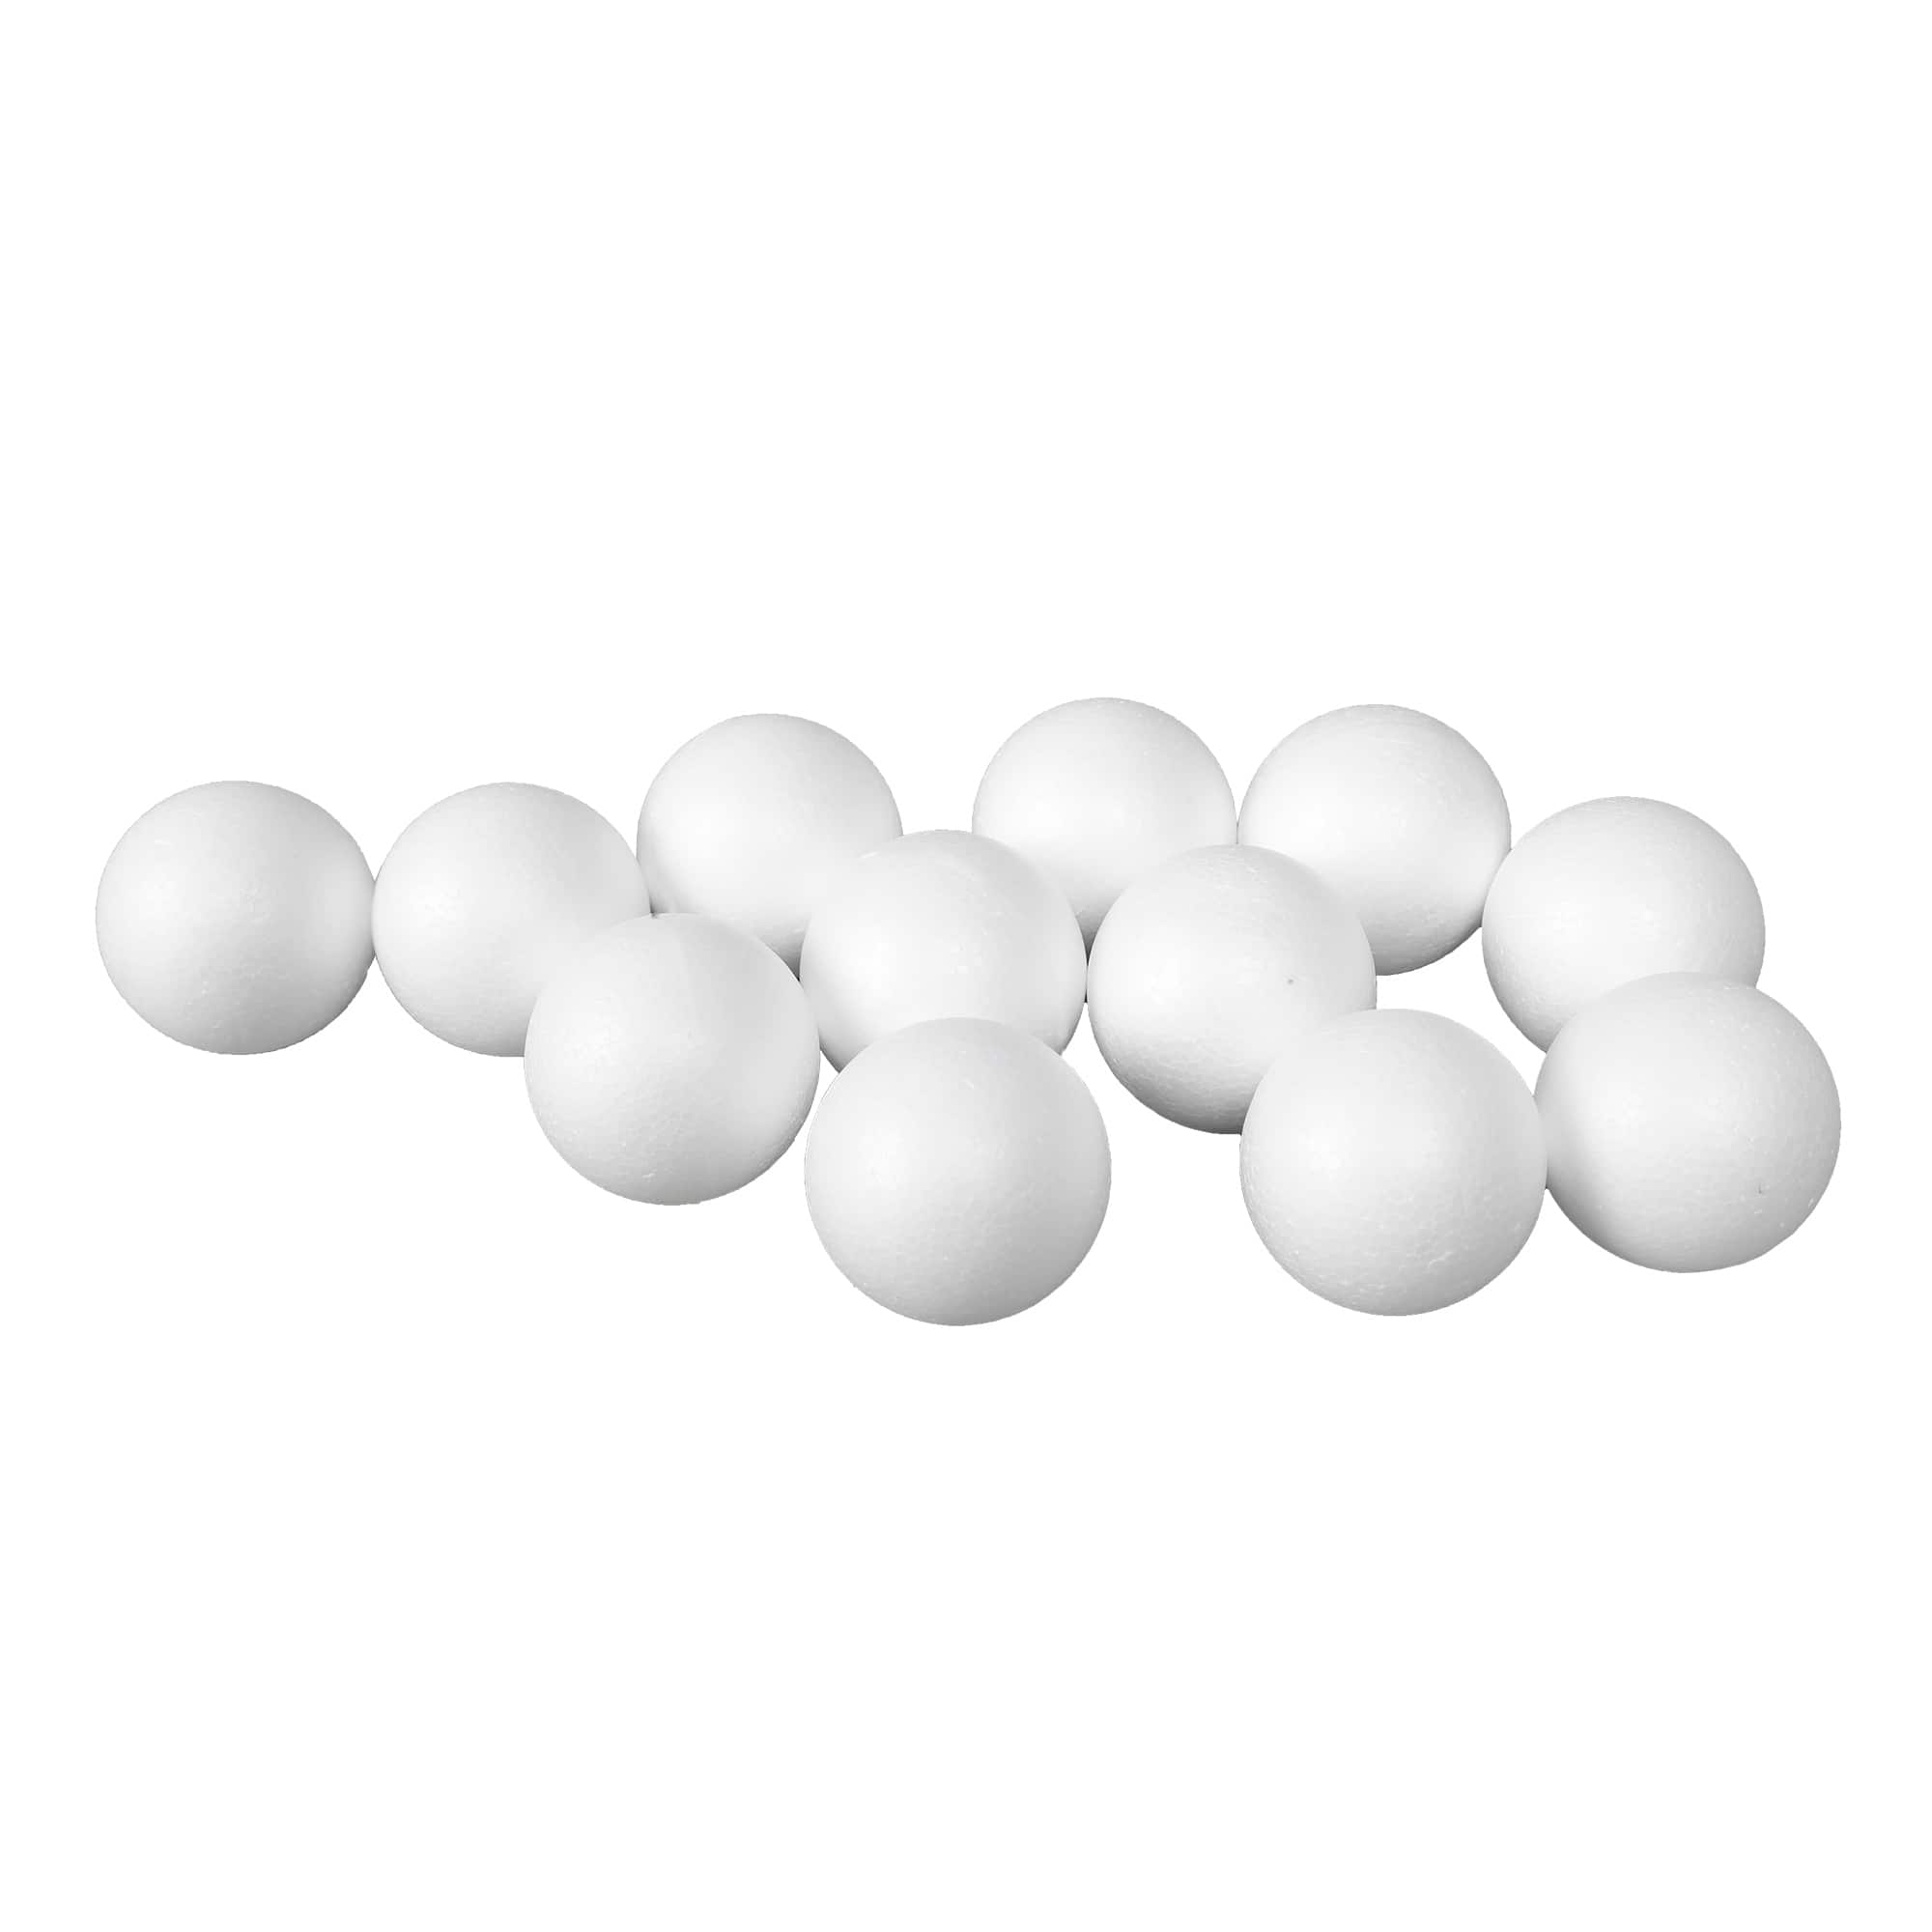 1.3 White Foam Balls, 12ct. by Ashland®